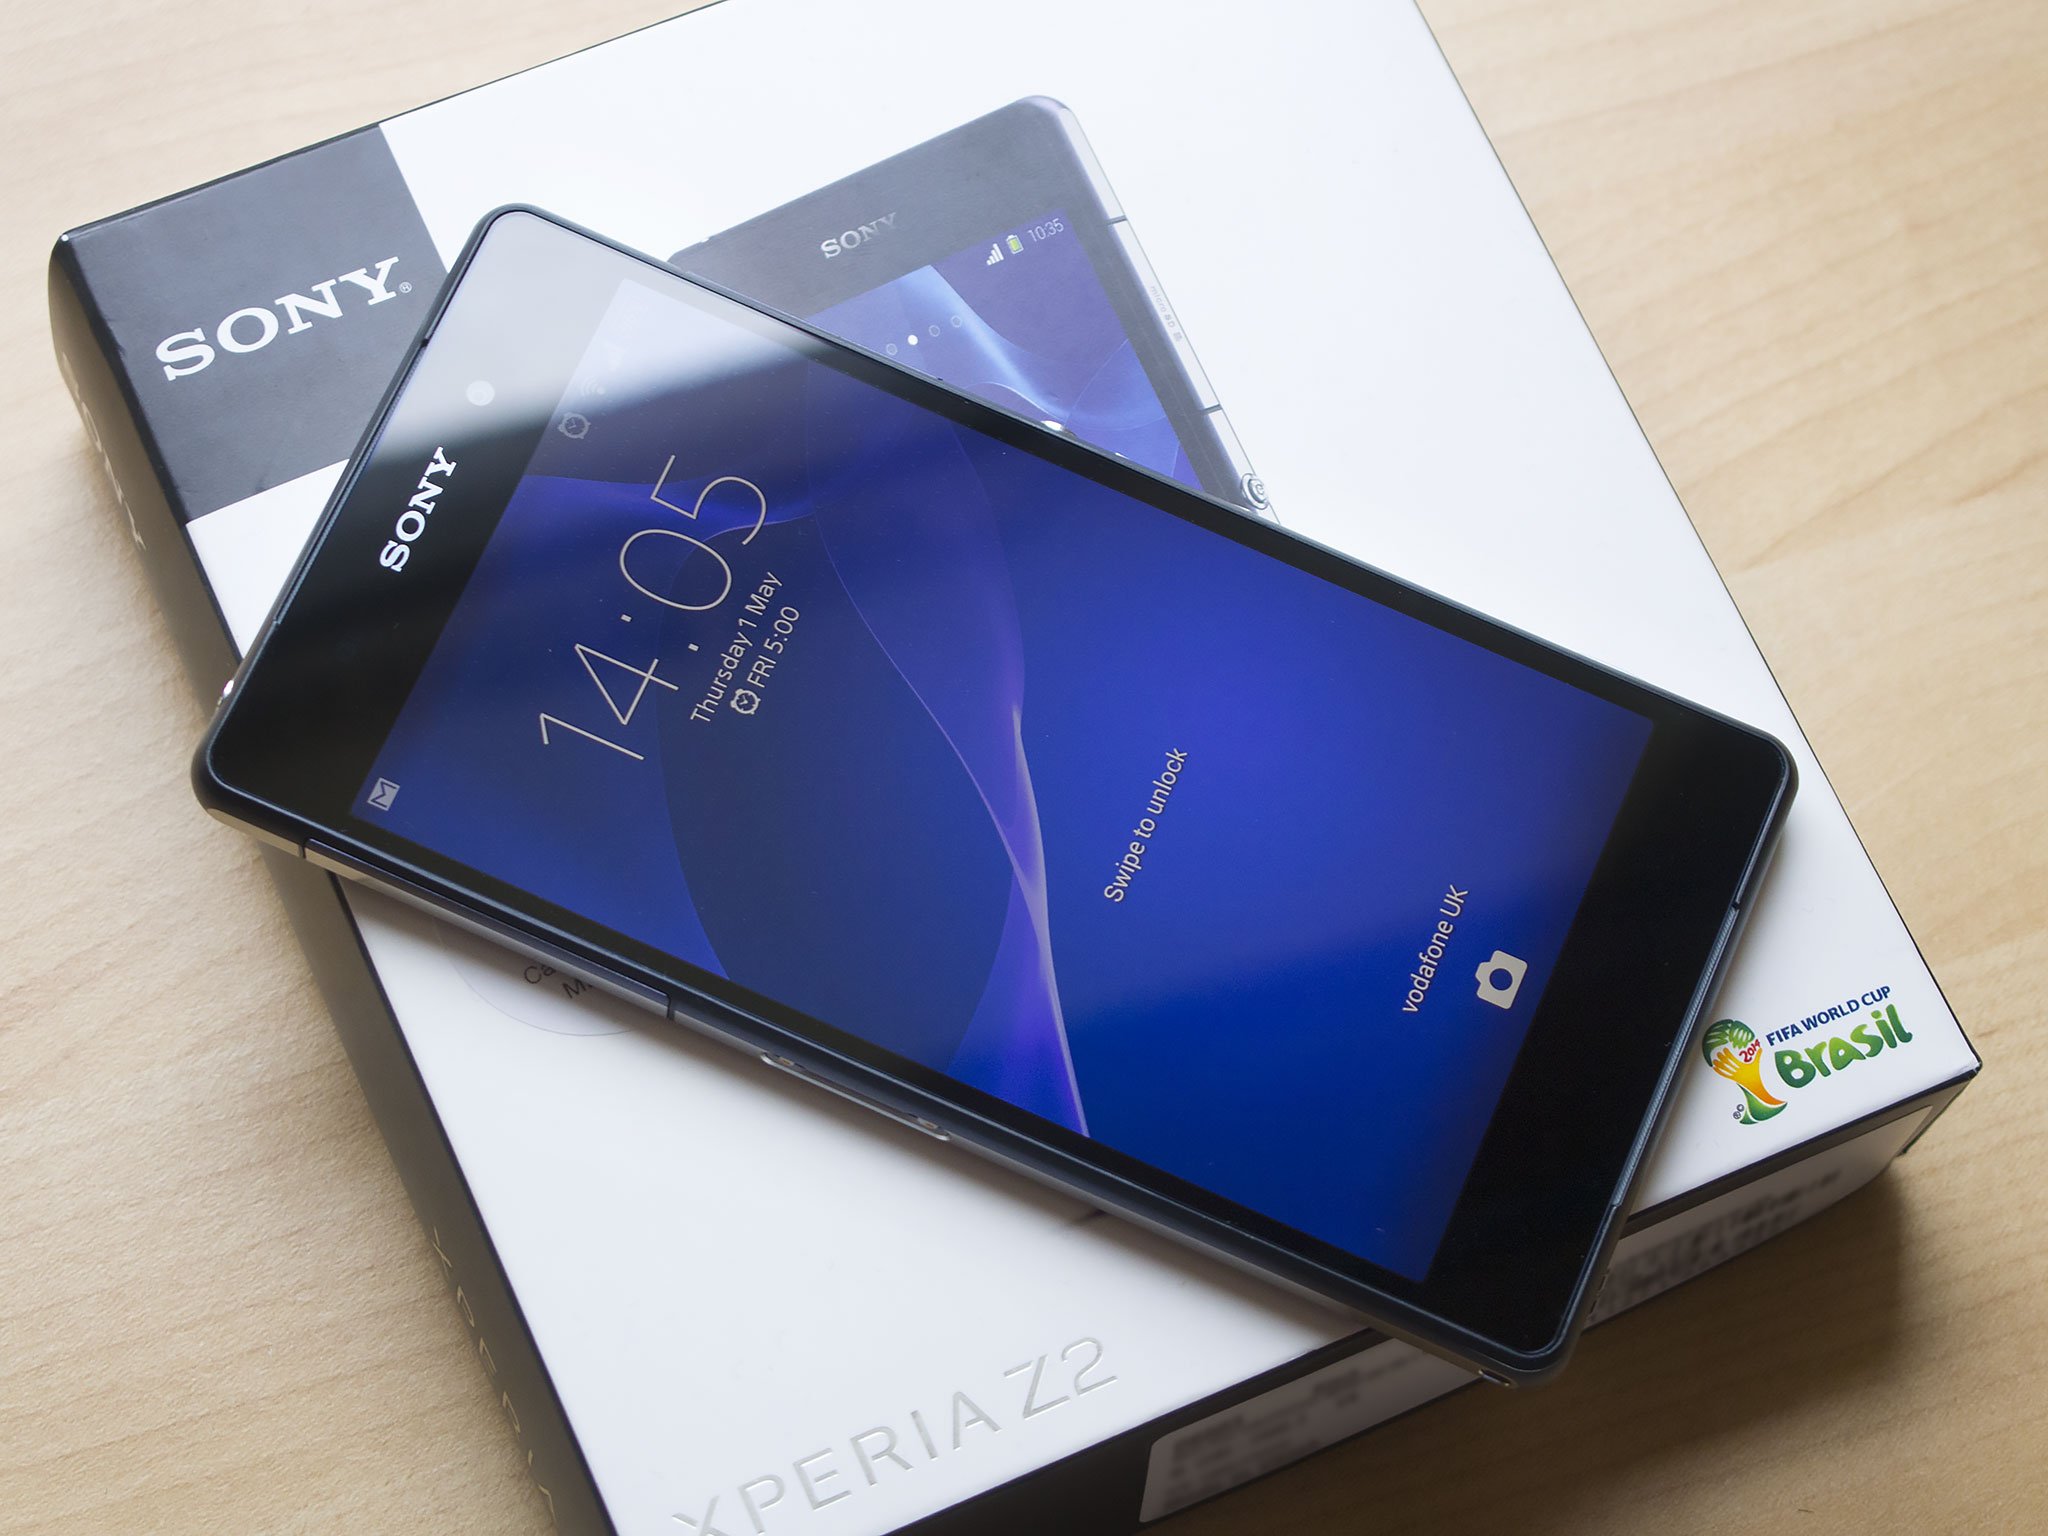 Sony Xperia Z2 box